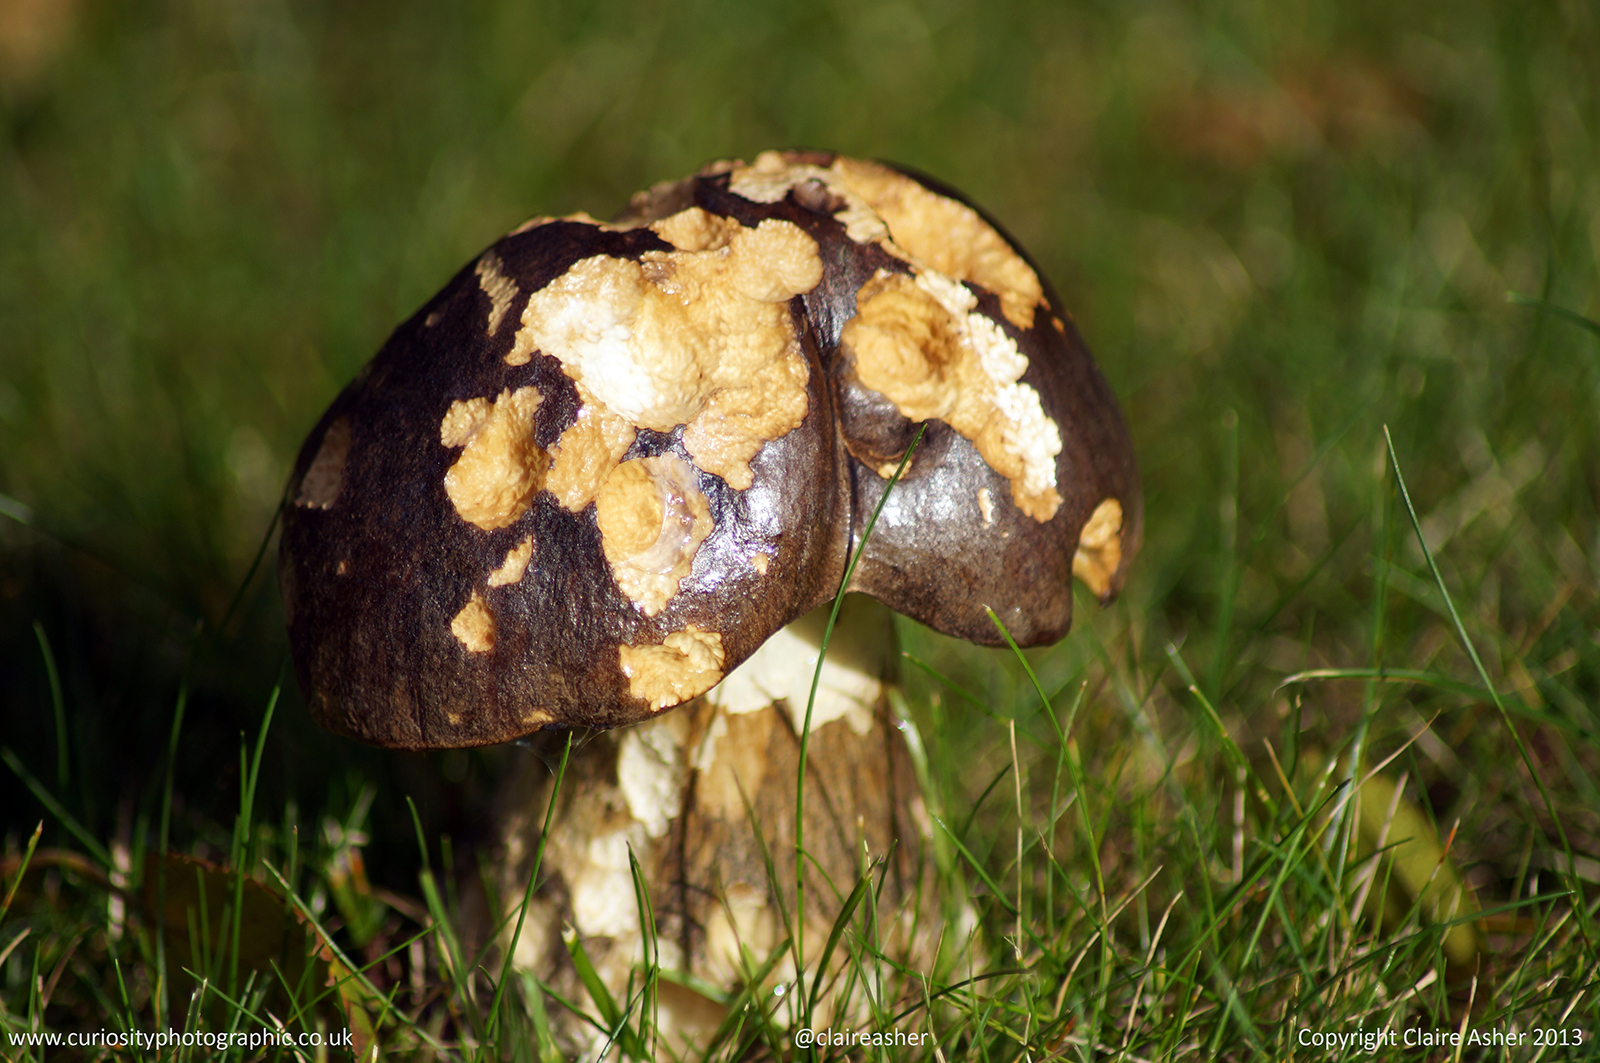 A Bay Boletus Mushroom (Boletus badius) photographed in Hertfordshire, England in 2013